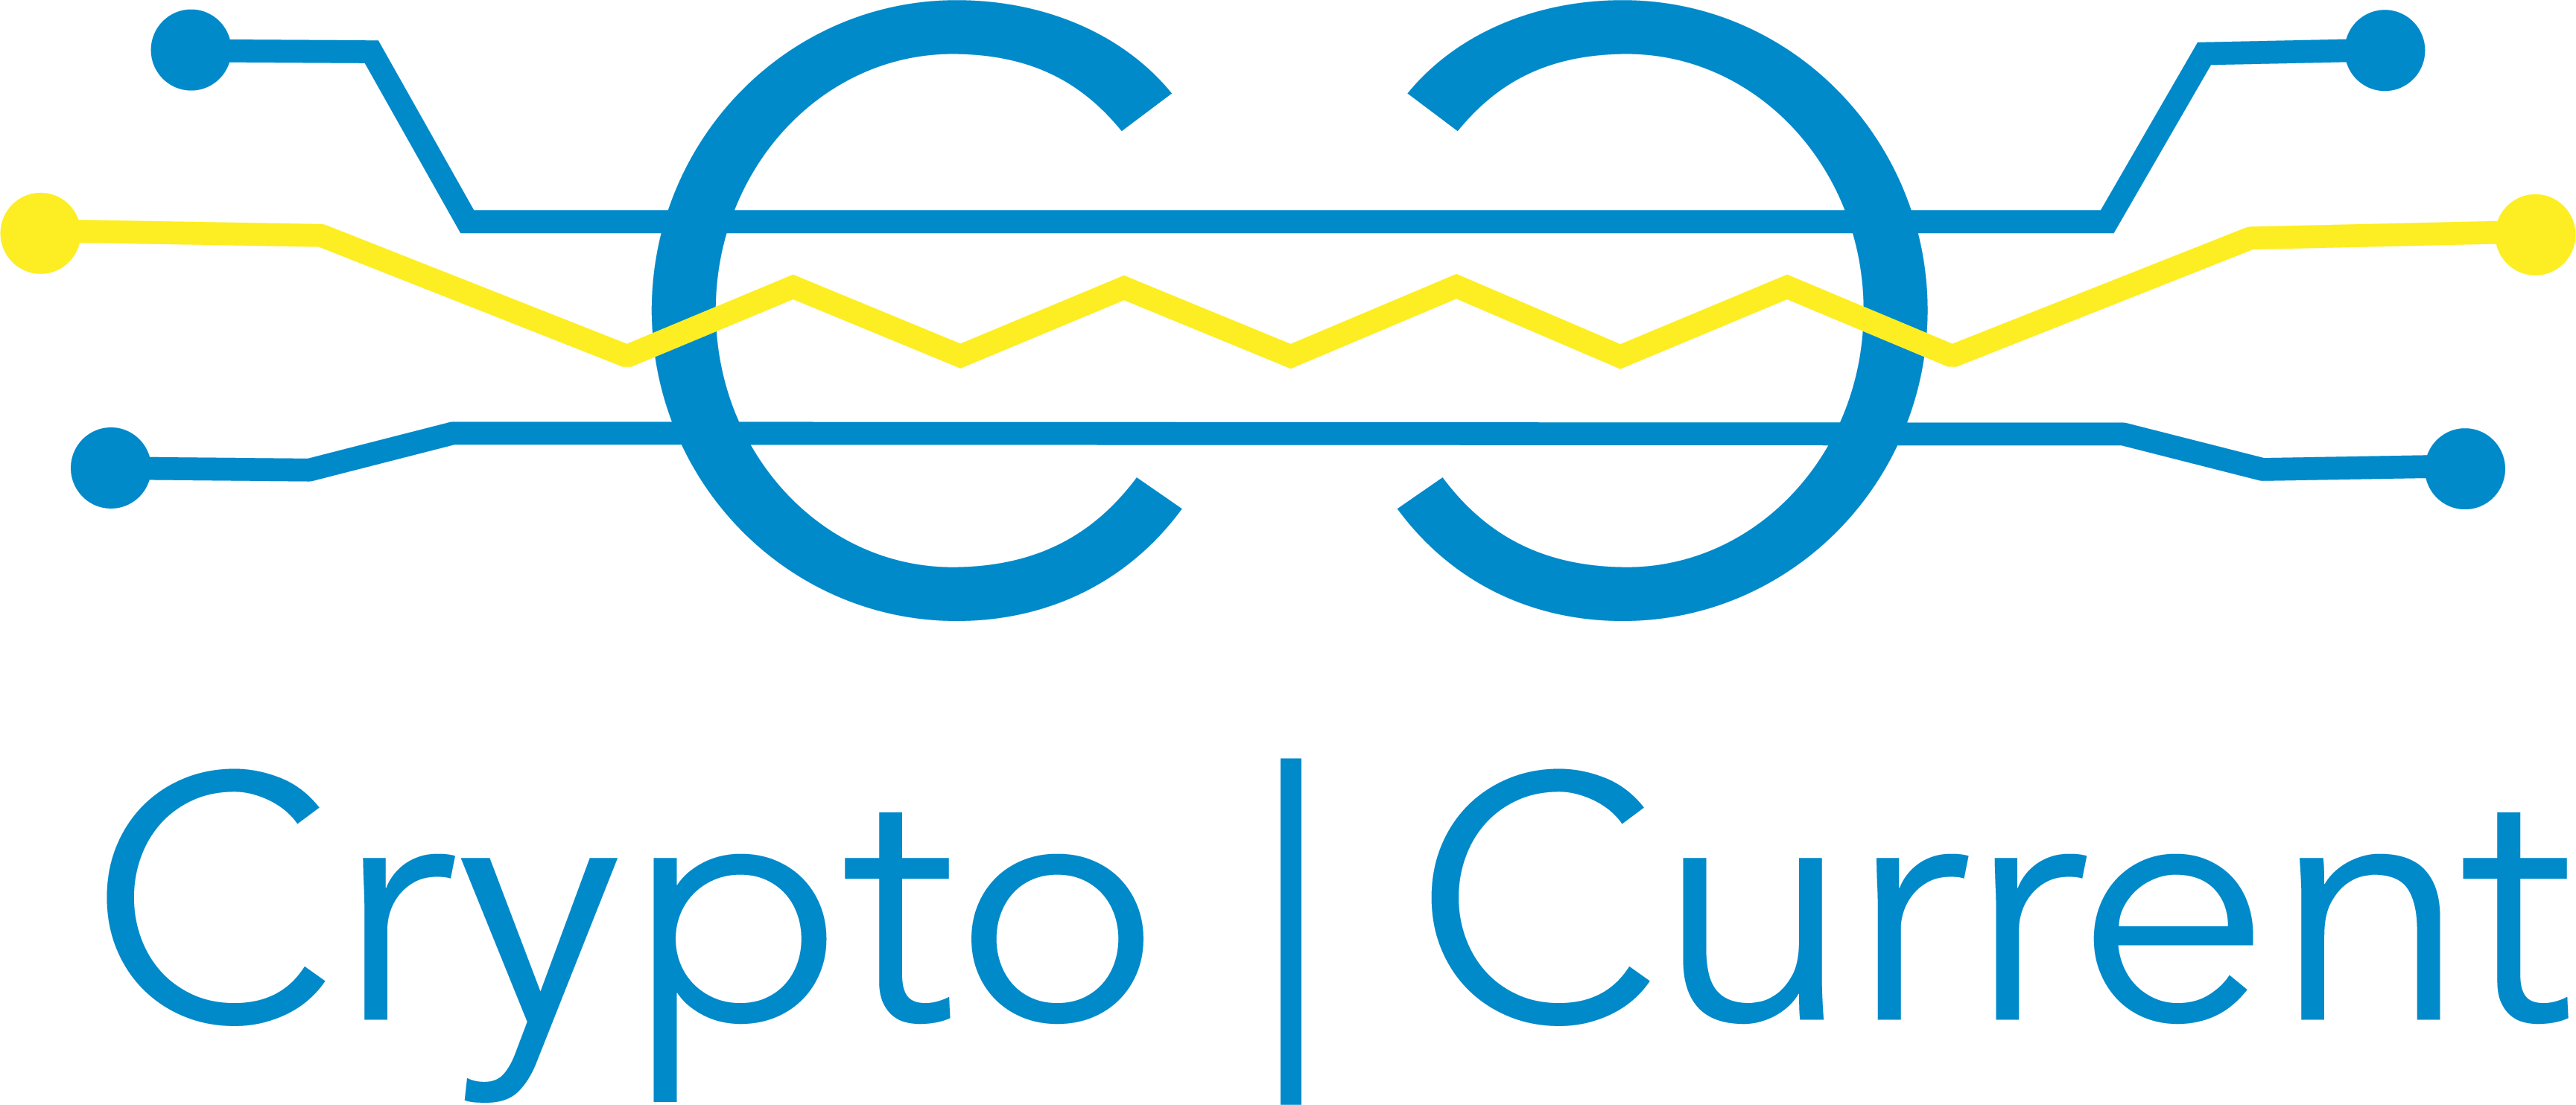 Crypto Current logo v2